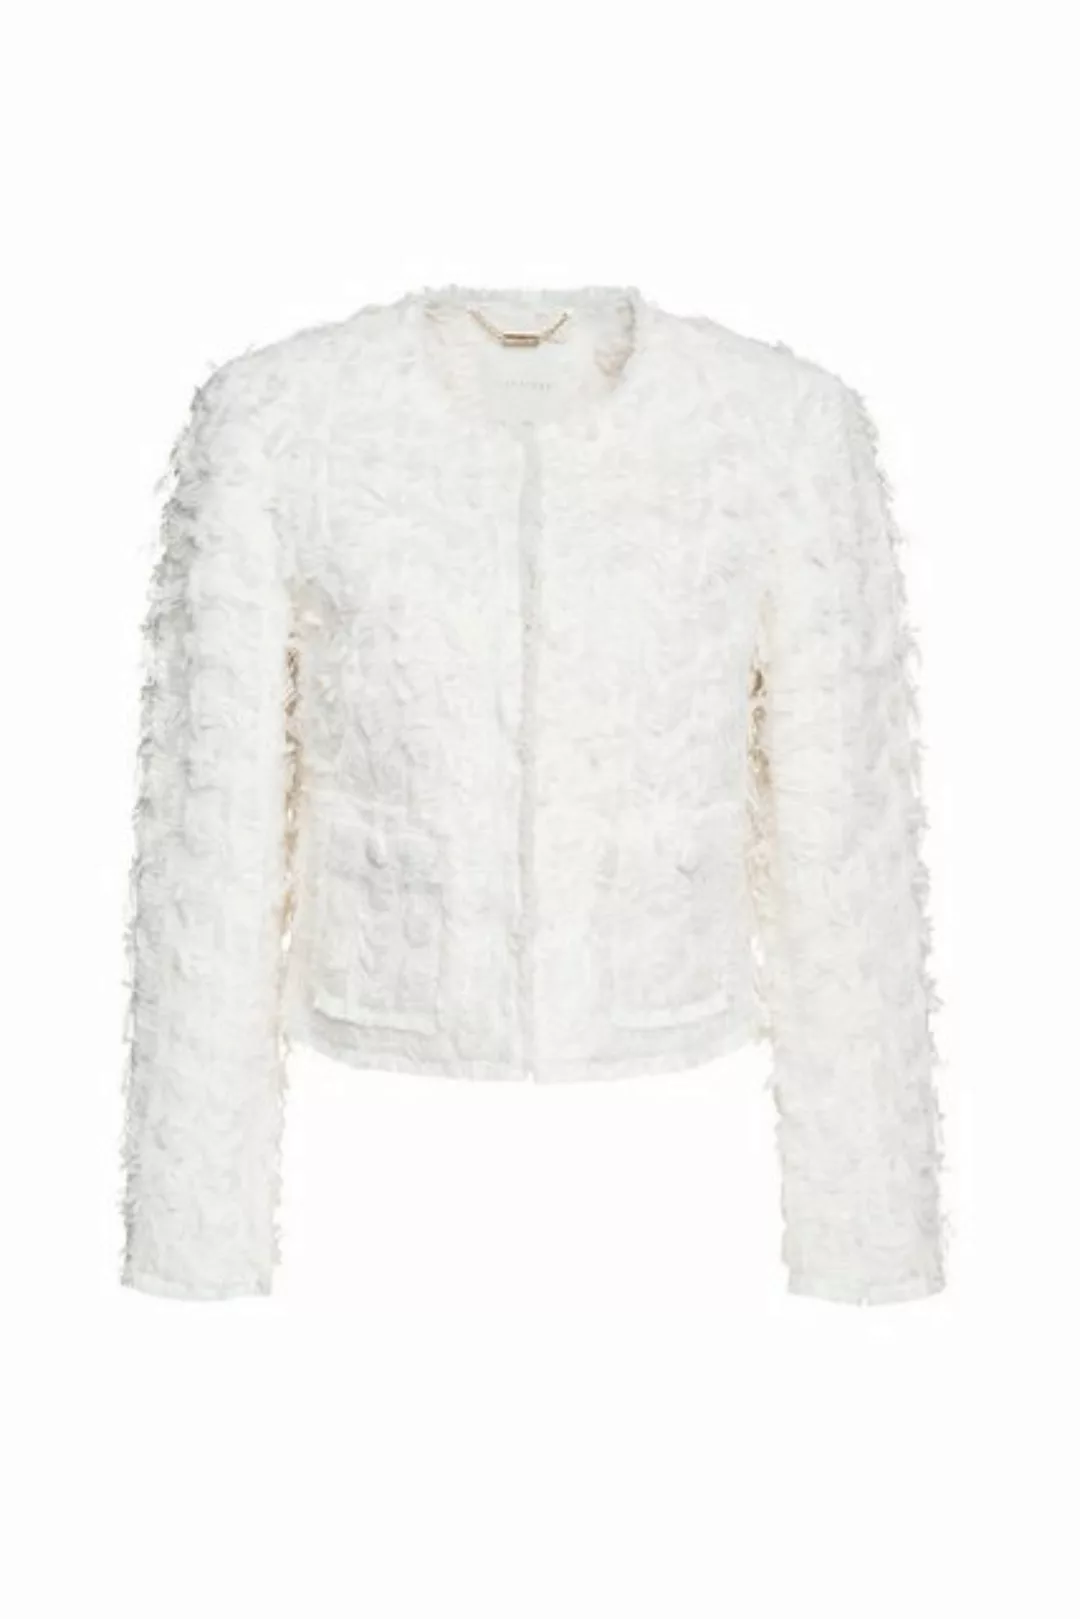 Rich & Royal Jackenblazer Boxy tweed jacket, pearl white günstig online kaufen